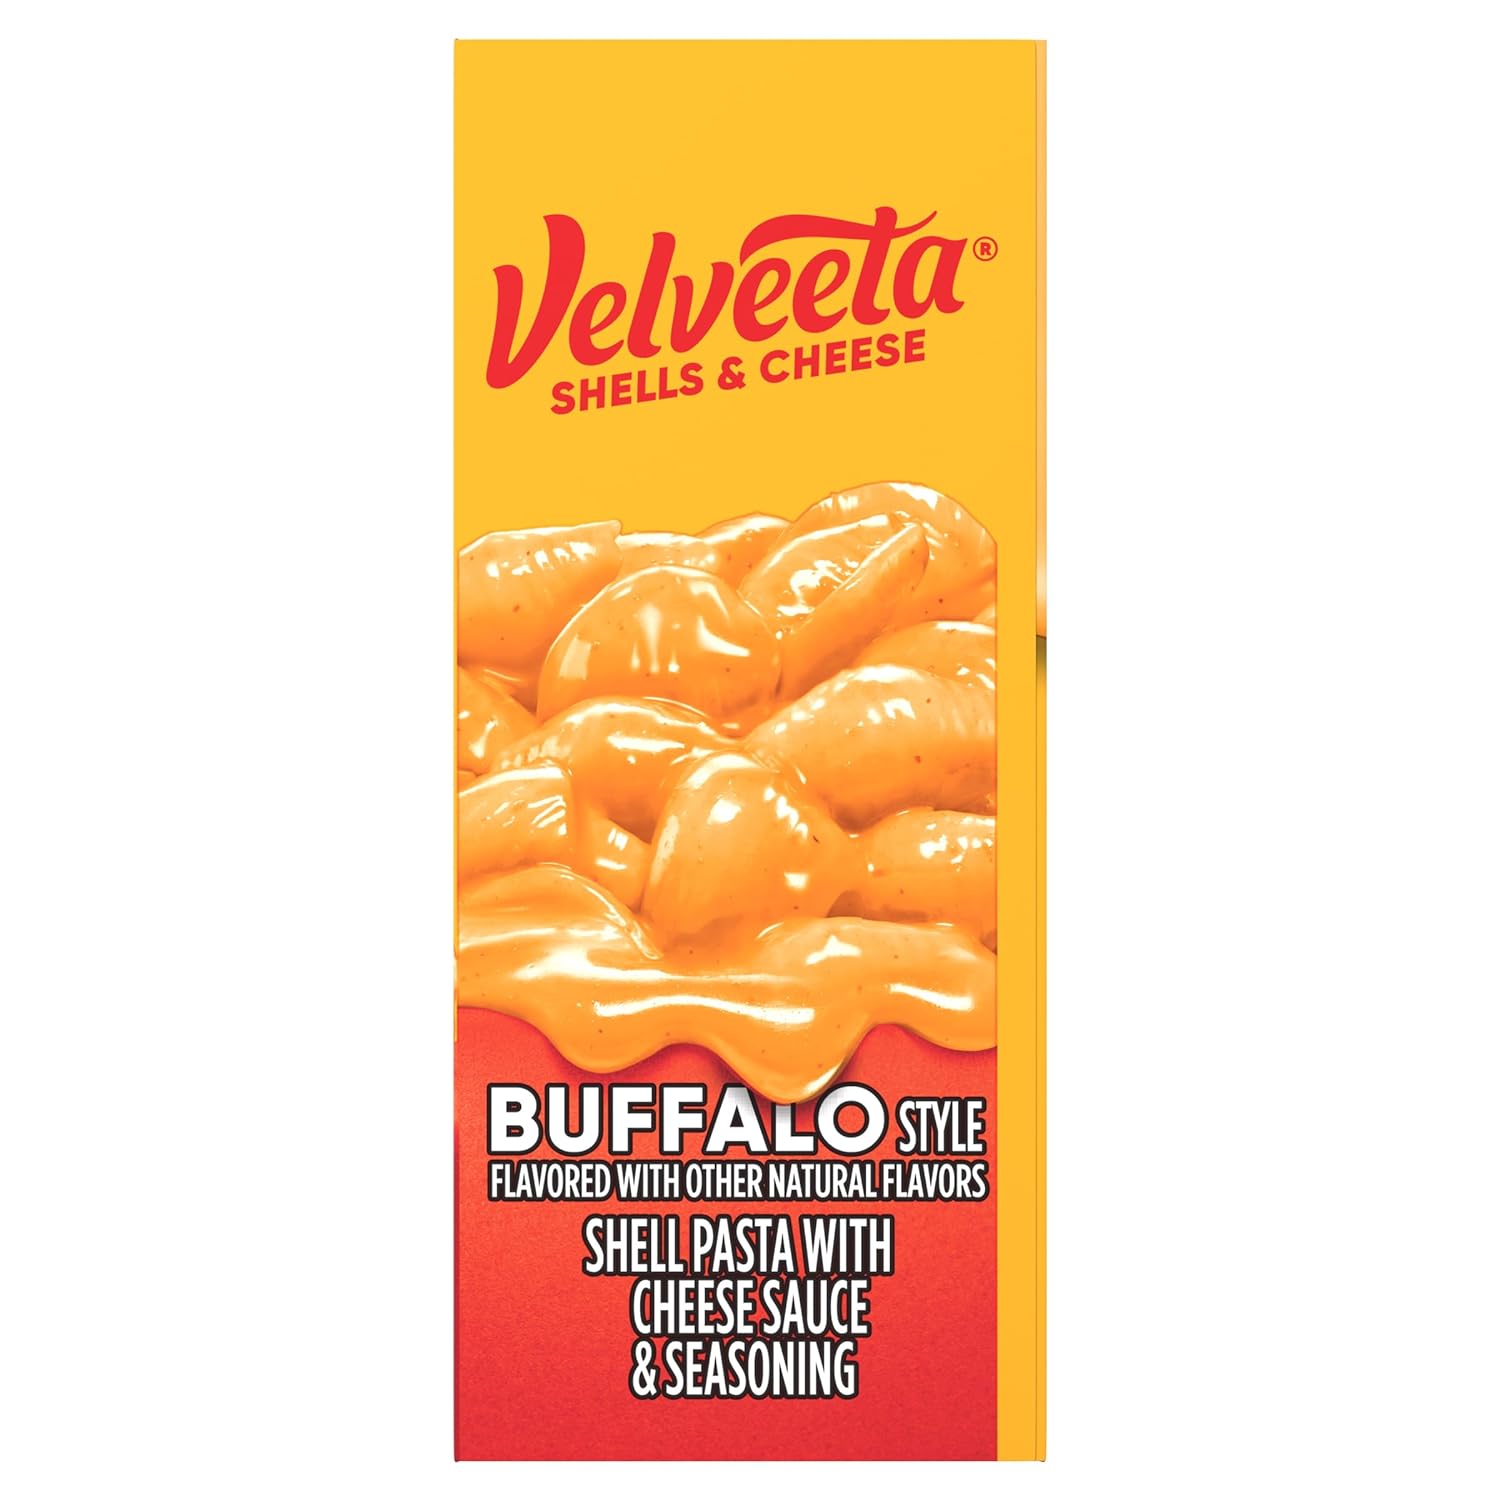 Velveeta Buffalo Style Shells & Cheese with Shell Pasta, Cheese Sauce and Seasoning, 11 oz Box : Everything Else